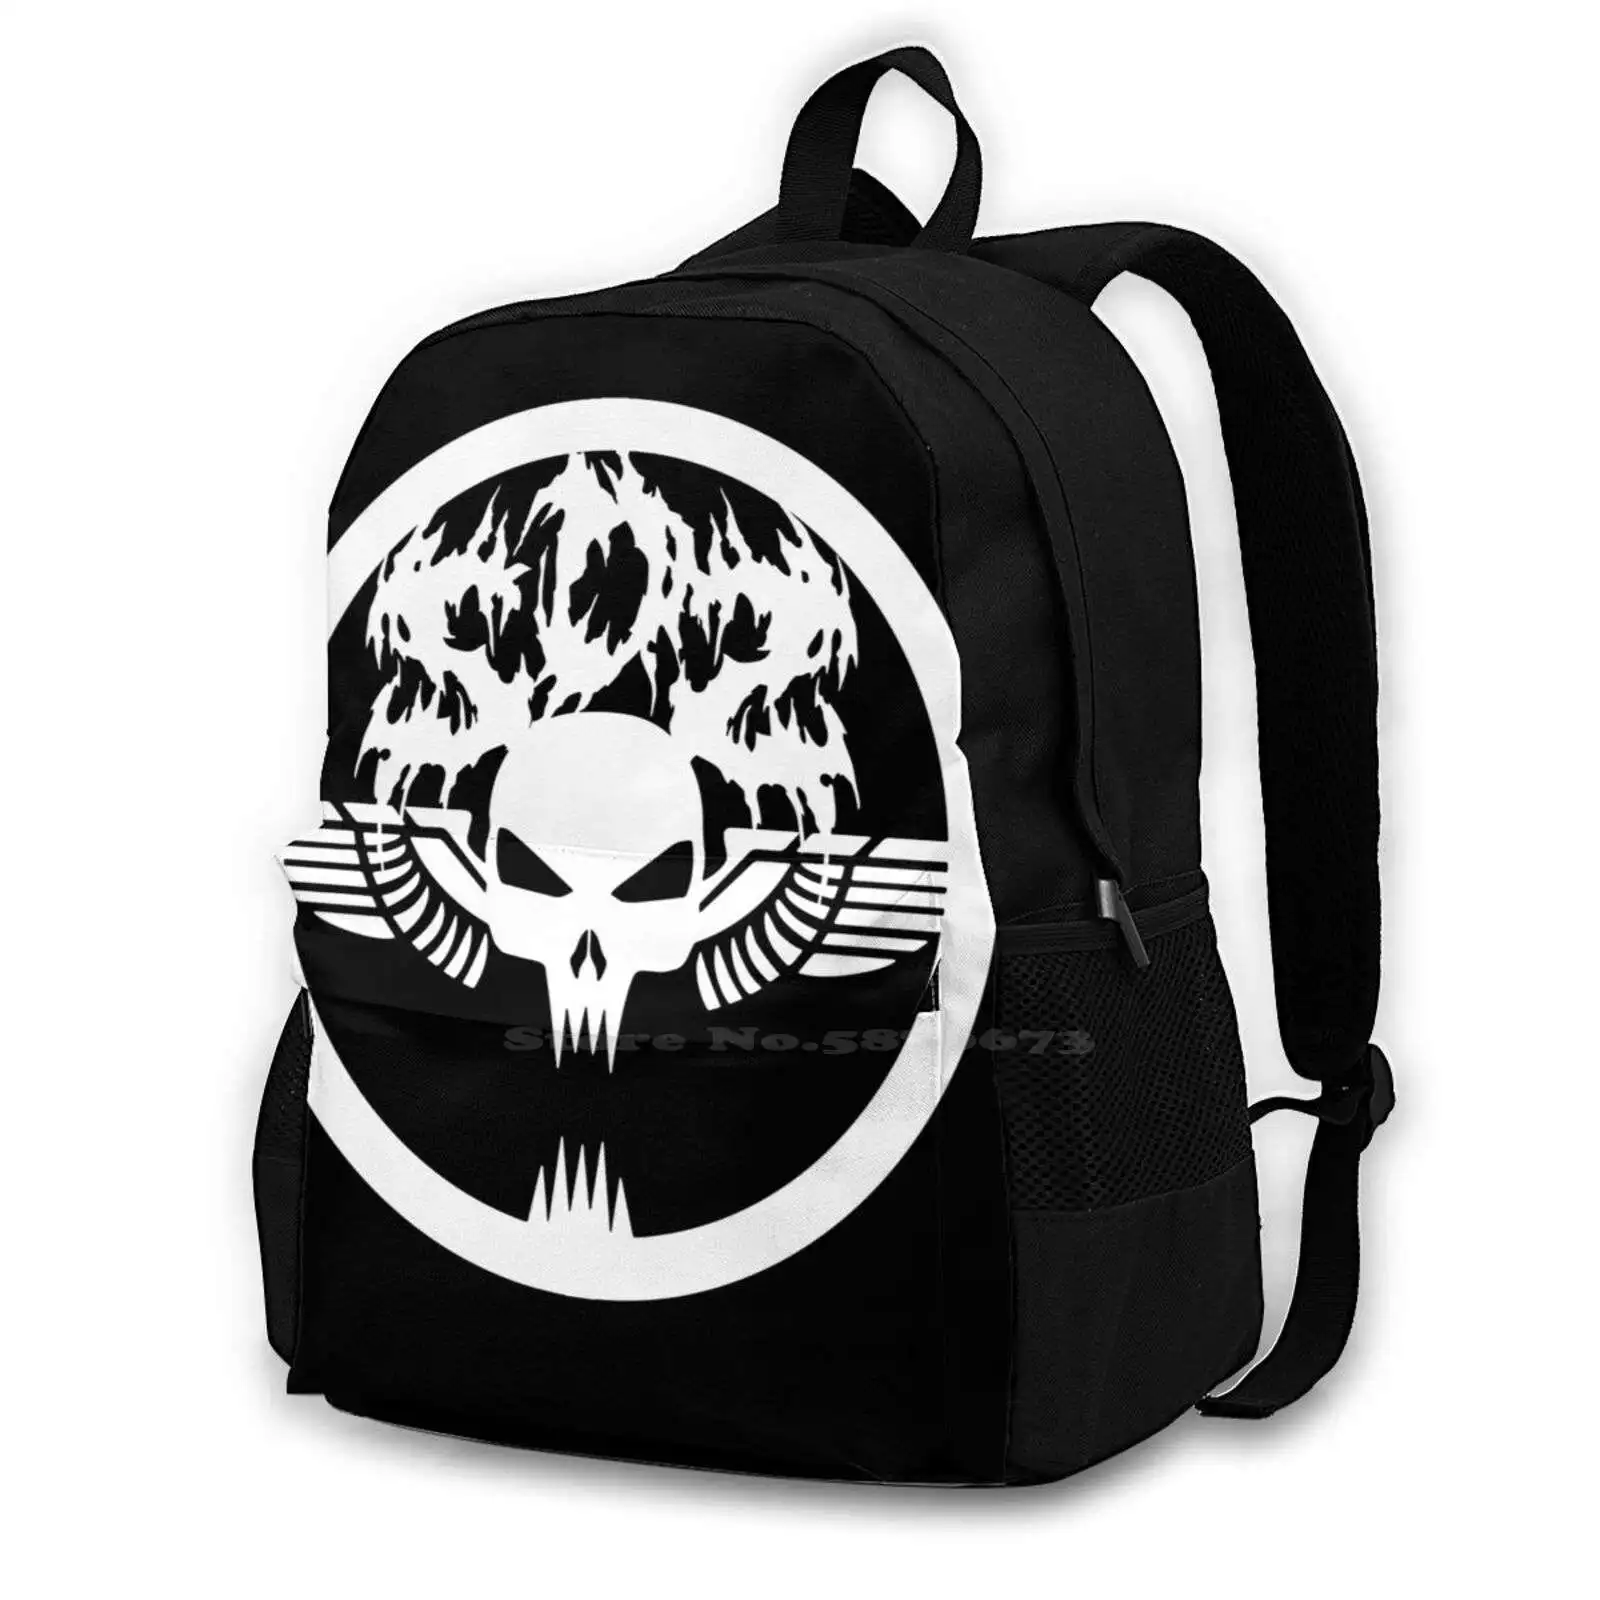 

Suicide Death Squad [Reverse] Fashion Bags Travel Laptop Backpack Suicide Death Squad Speedcore Terror Black Death Hellcreator